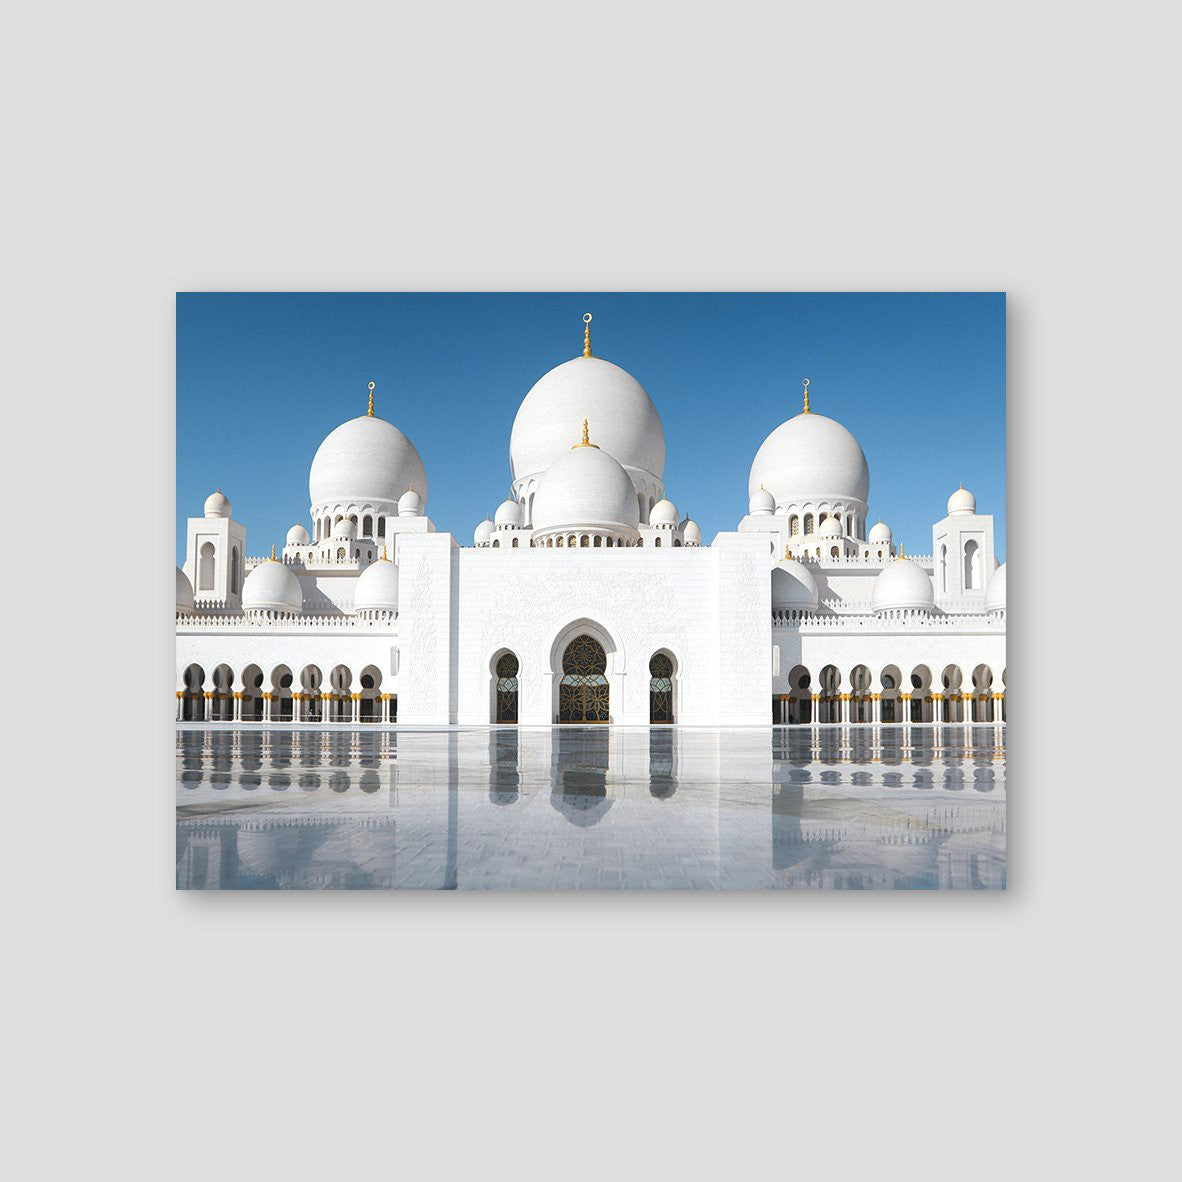 Sheikh Zayed Mosque, UAE 2020 #1 - Doenvang